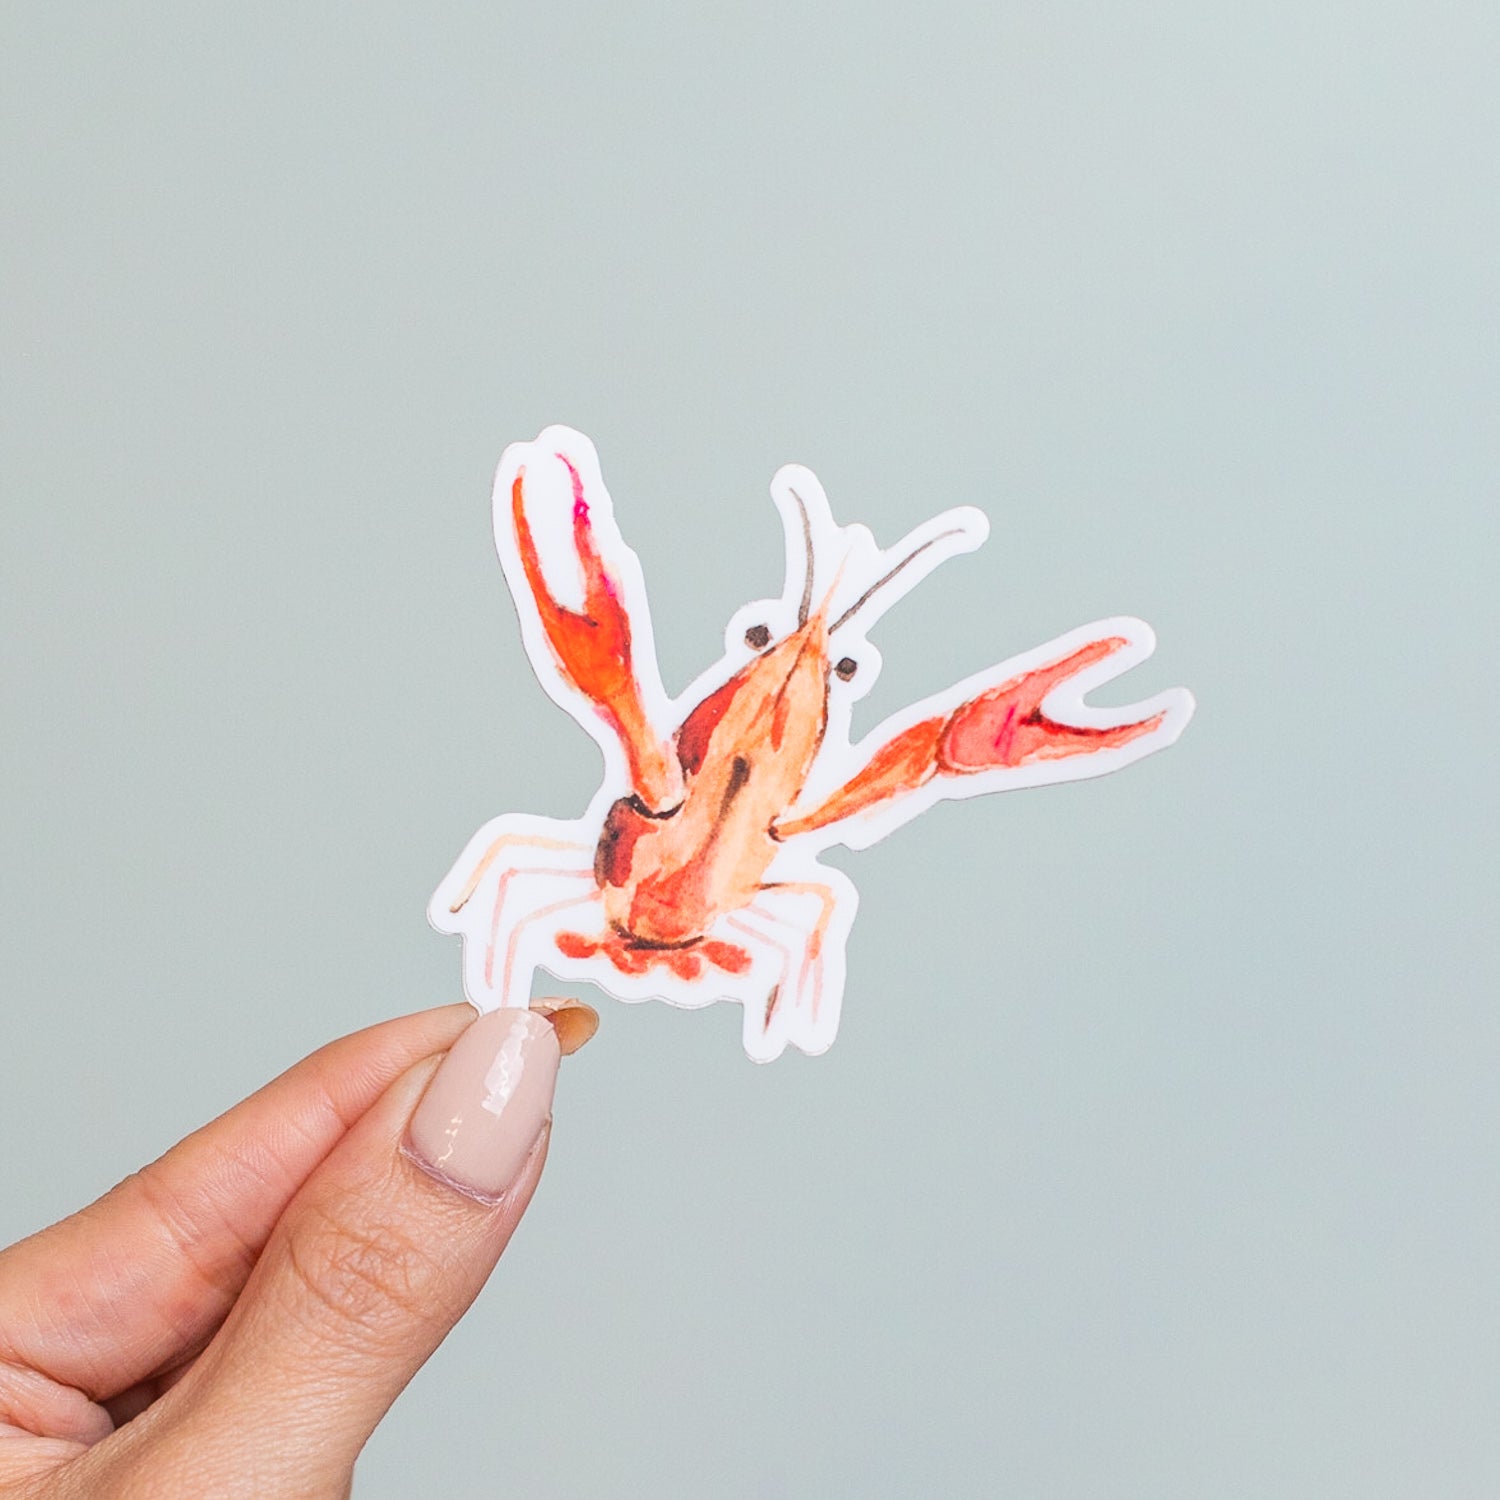 Crawfish Sticker